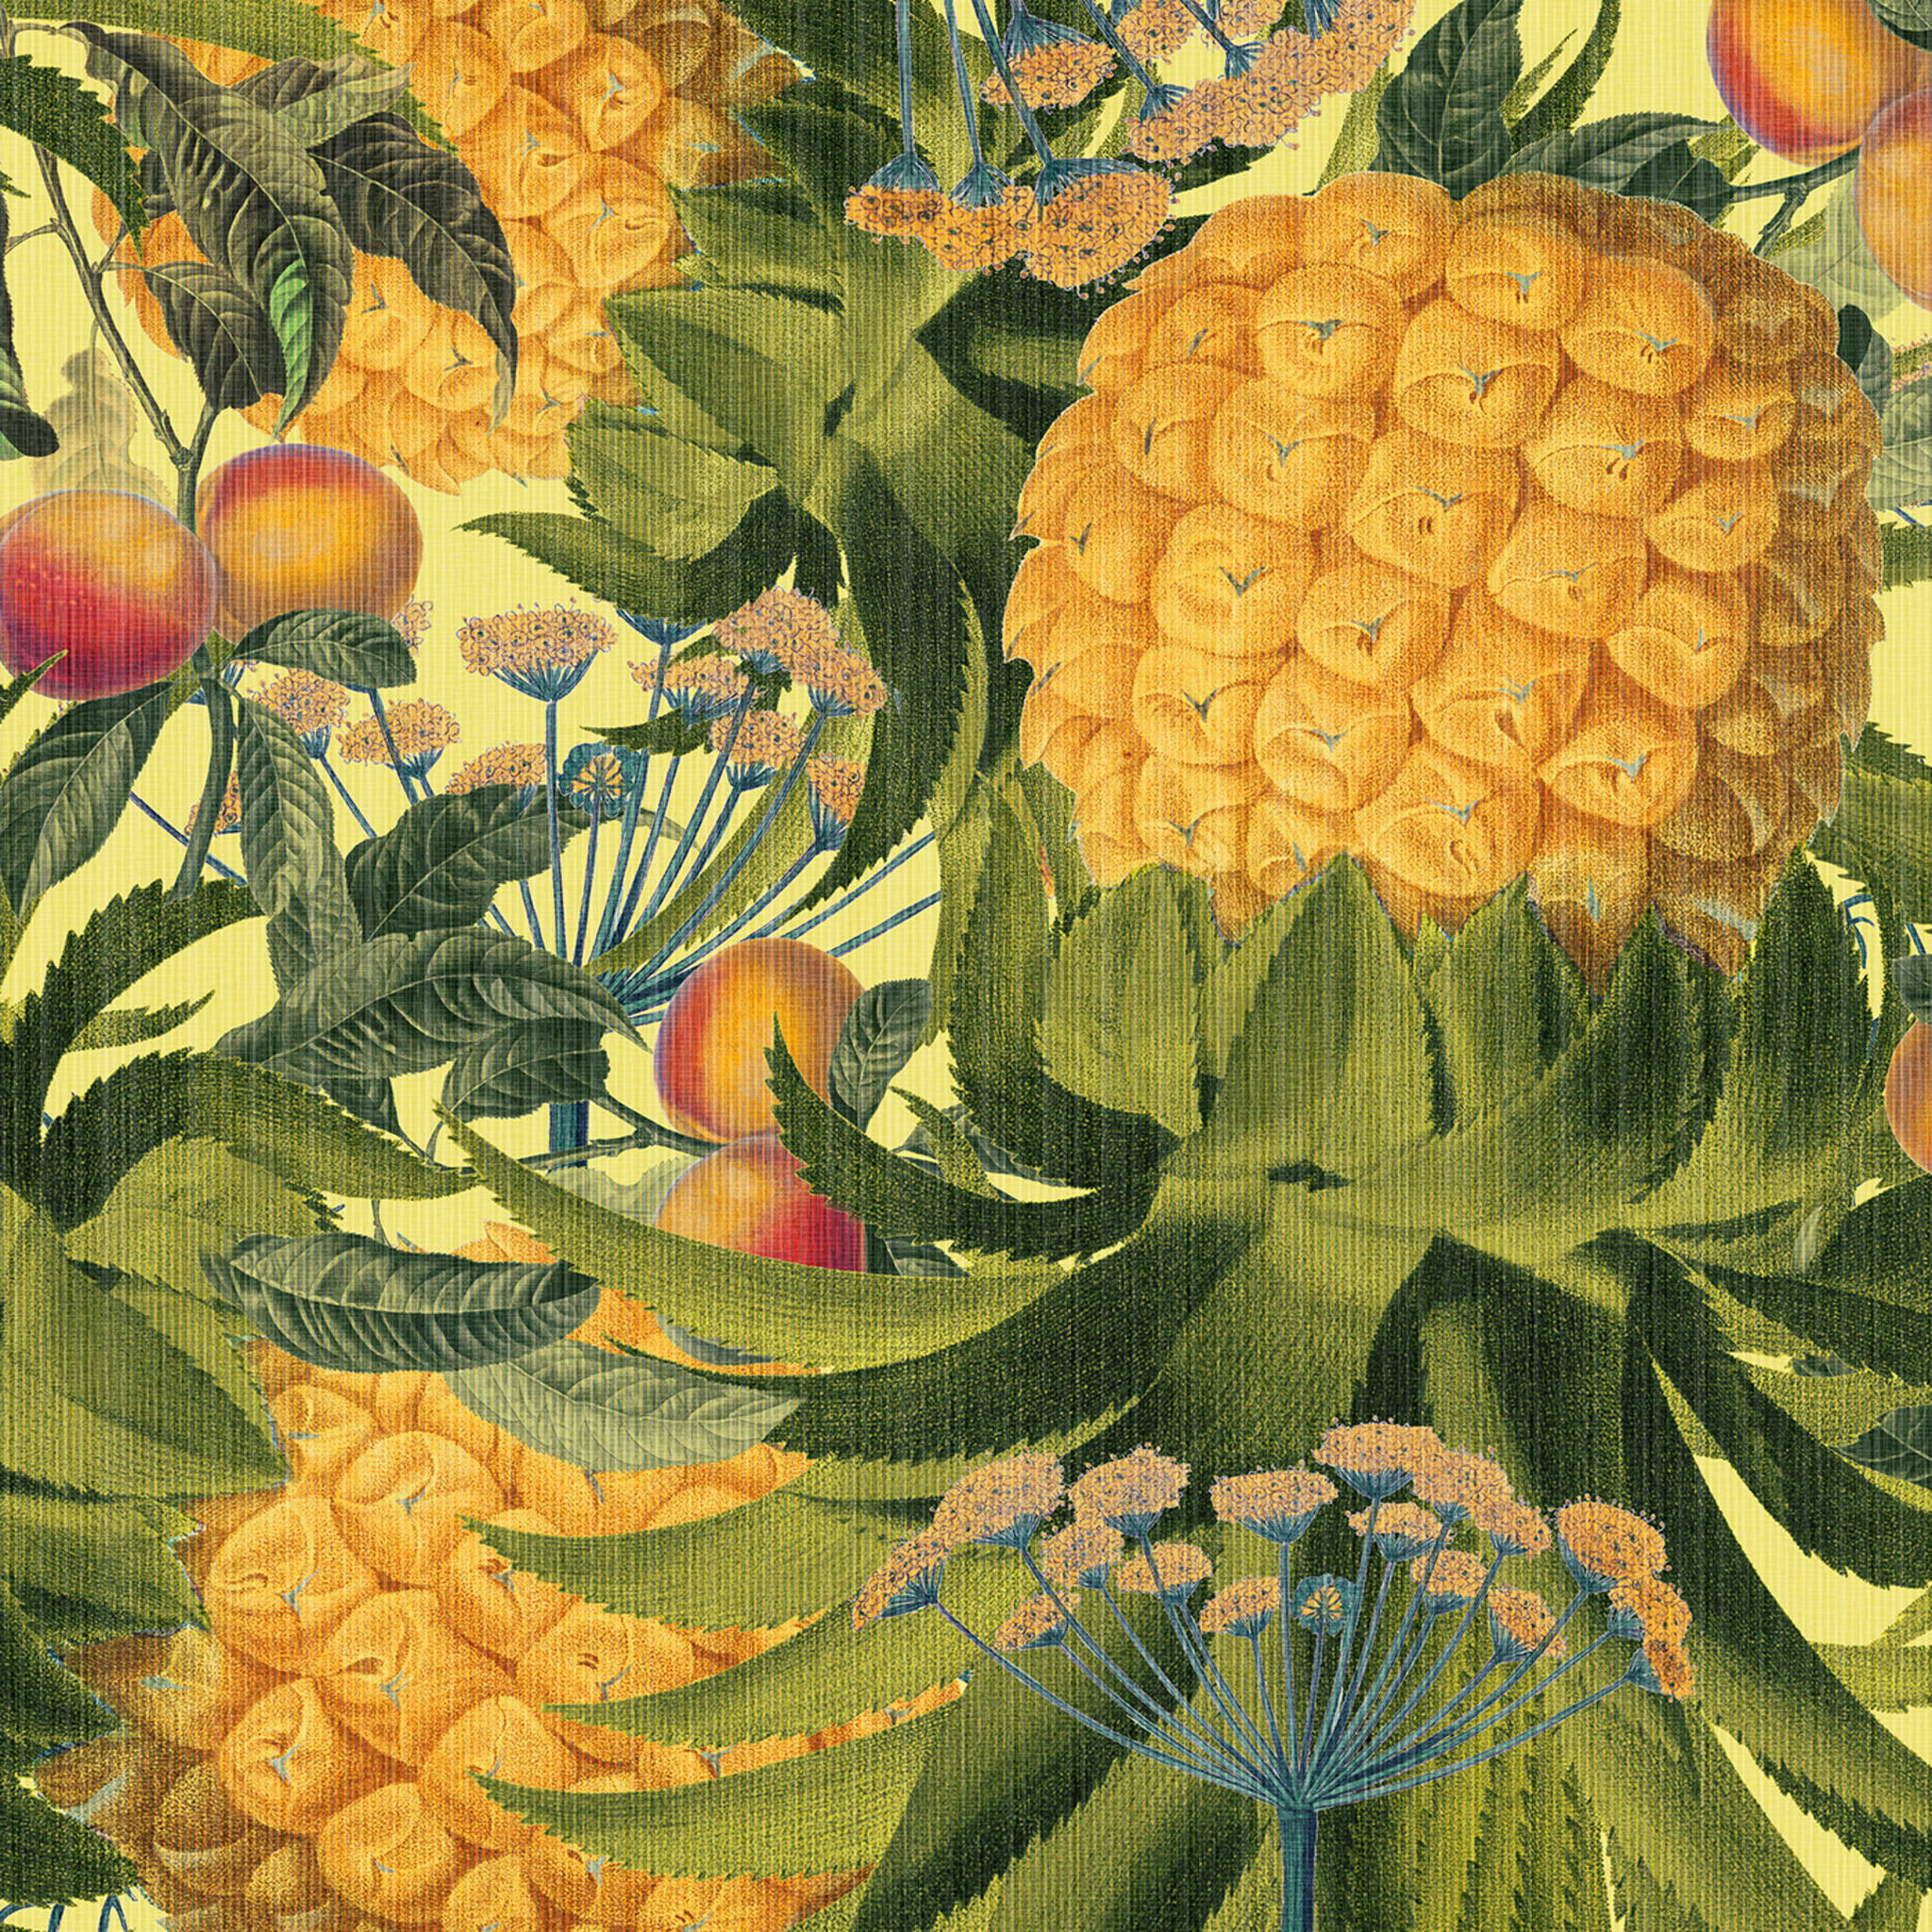 Giant Pineapple Wallpaper by Vzn Studio - Alternative view 1